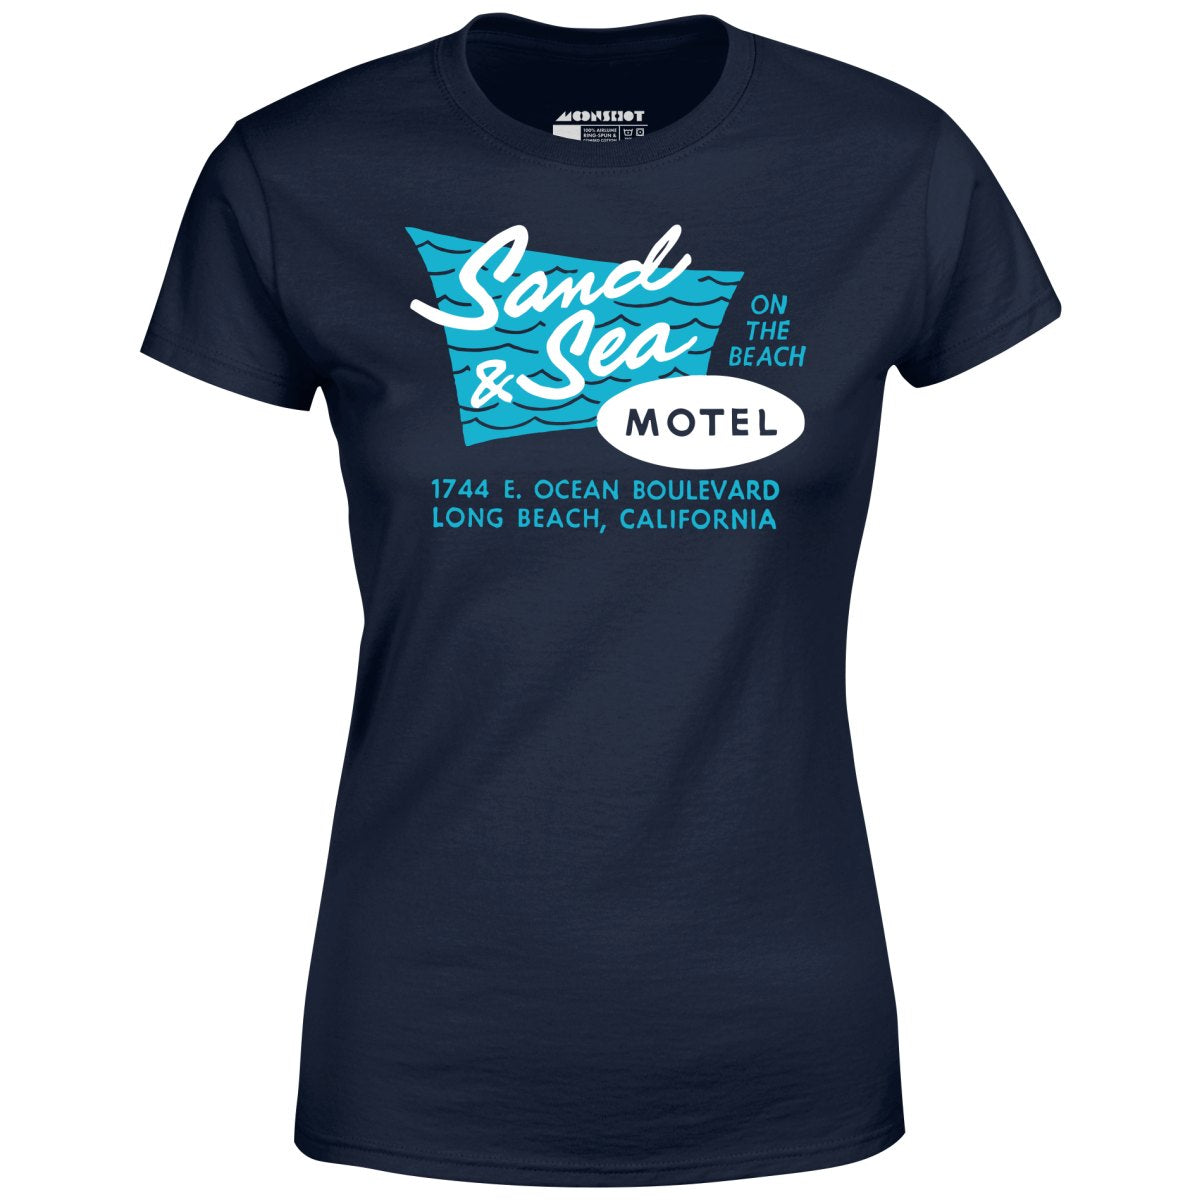 Sand & Sea Motel - Long Beach, CA - Vintage Motel - Women's T-Shirt